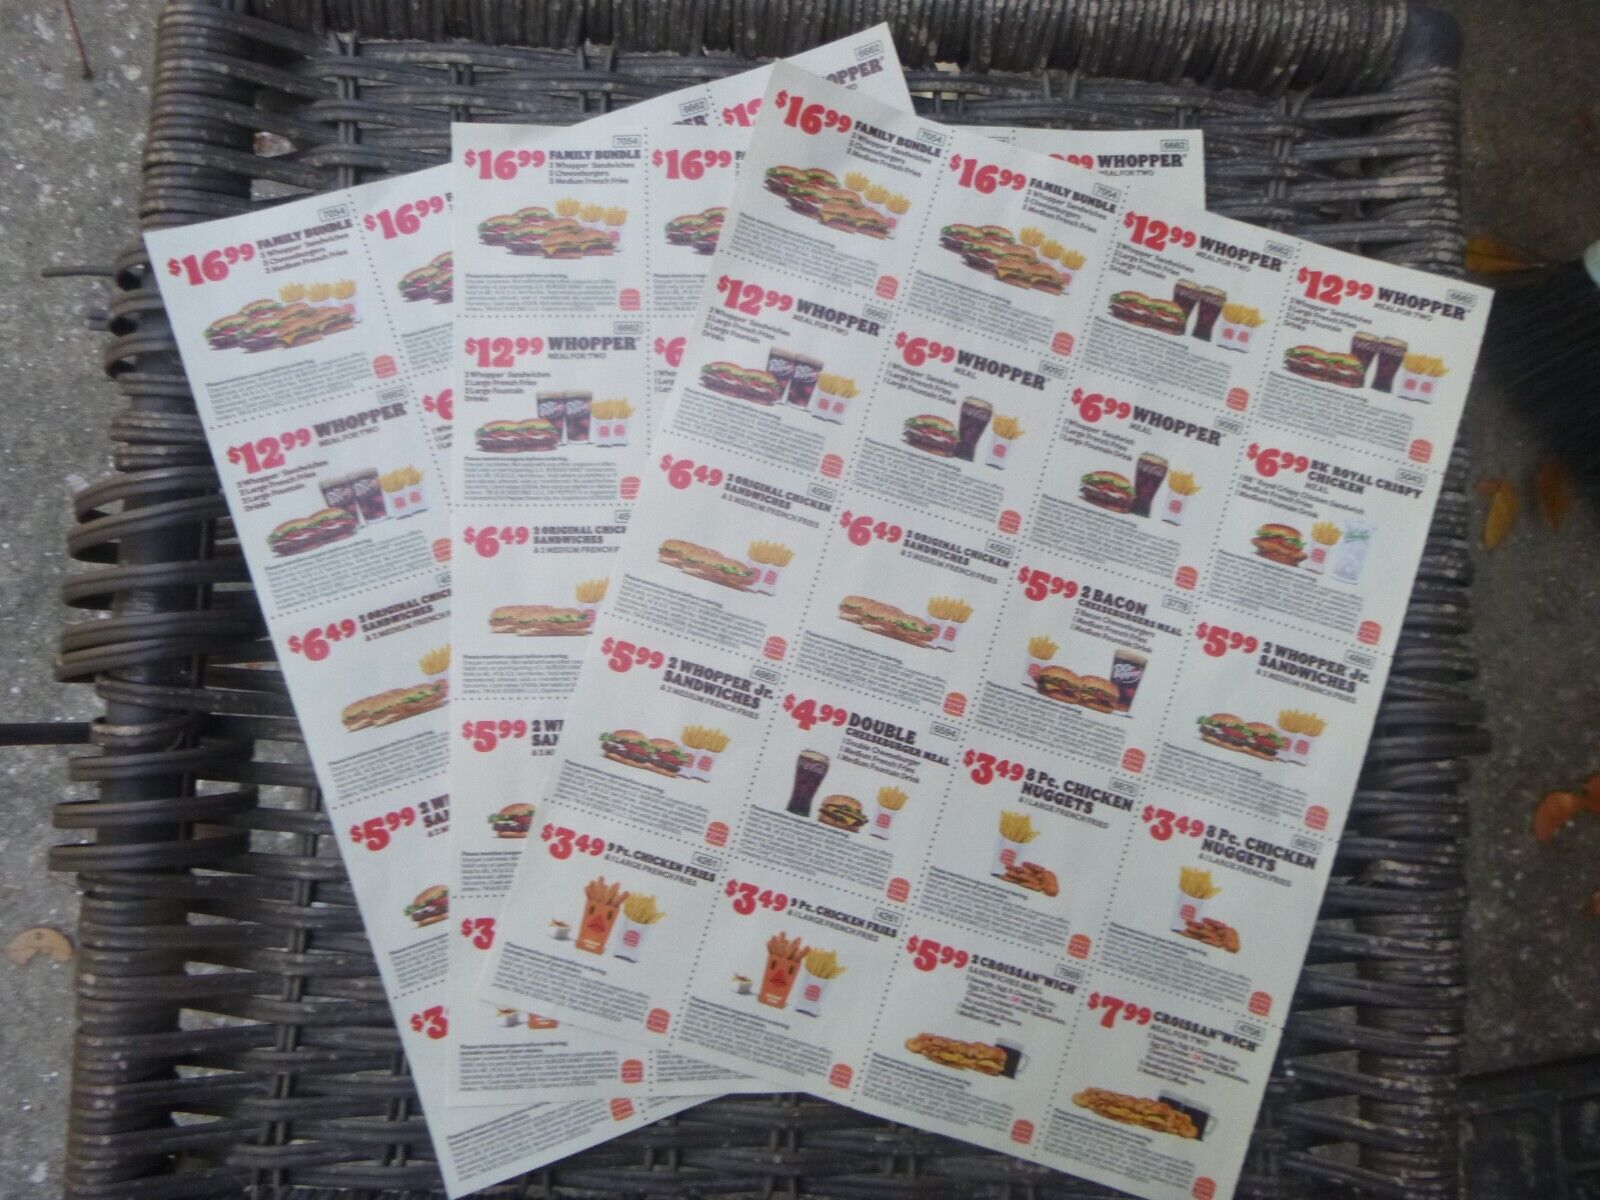 Burger King Coupons (3 sheets) 60 coupons total  GREAT SAVINGS!